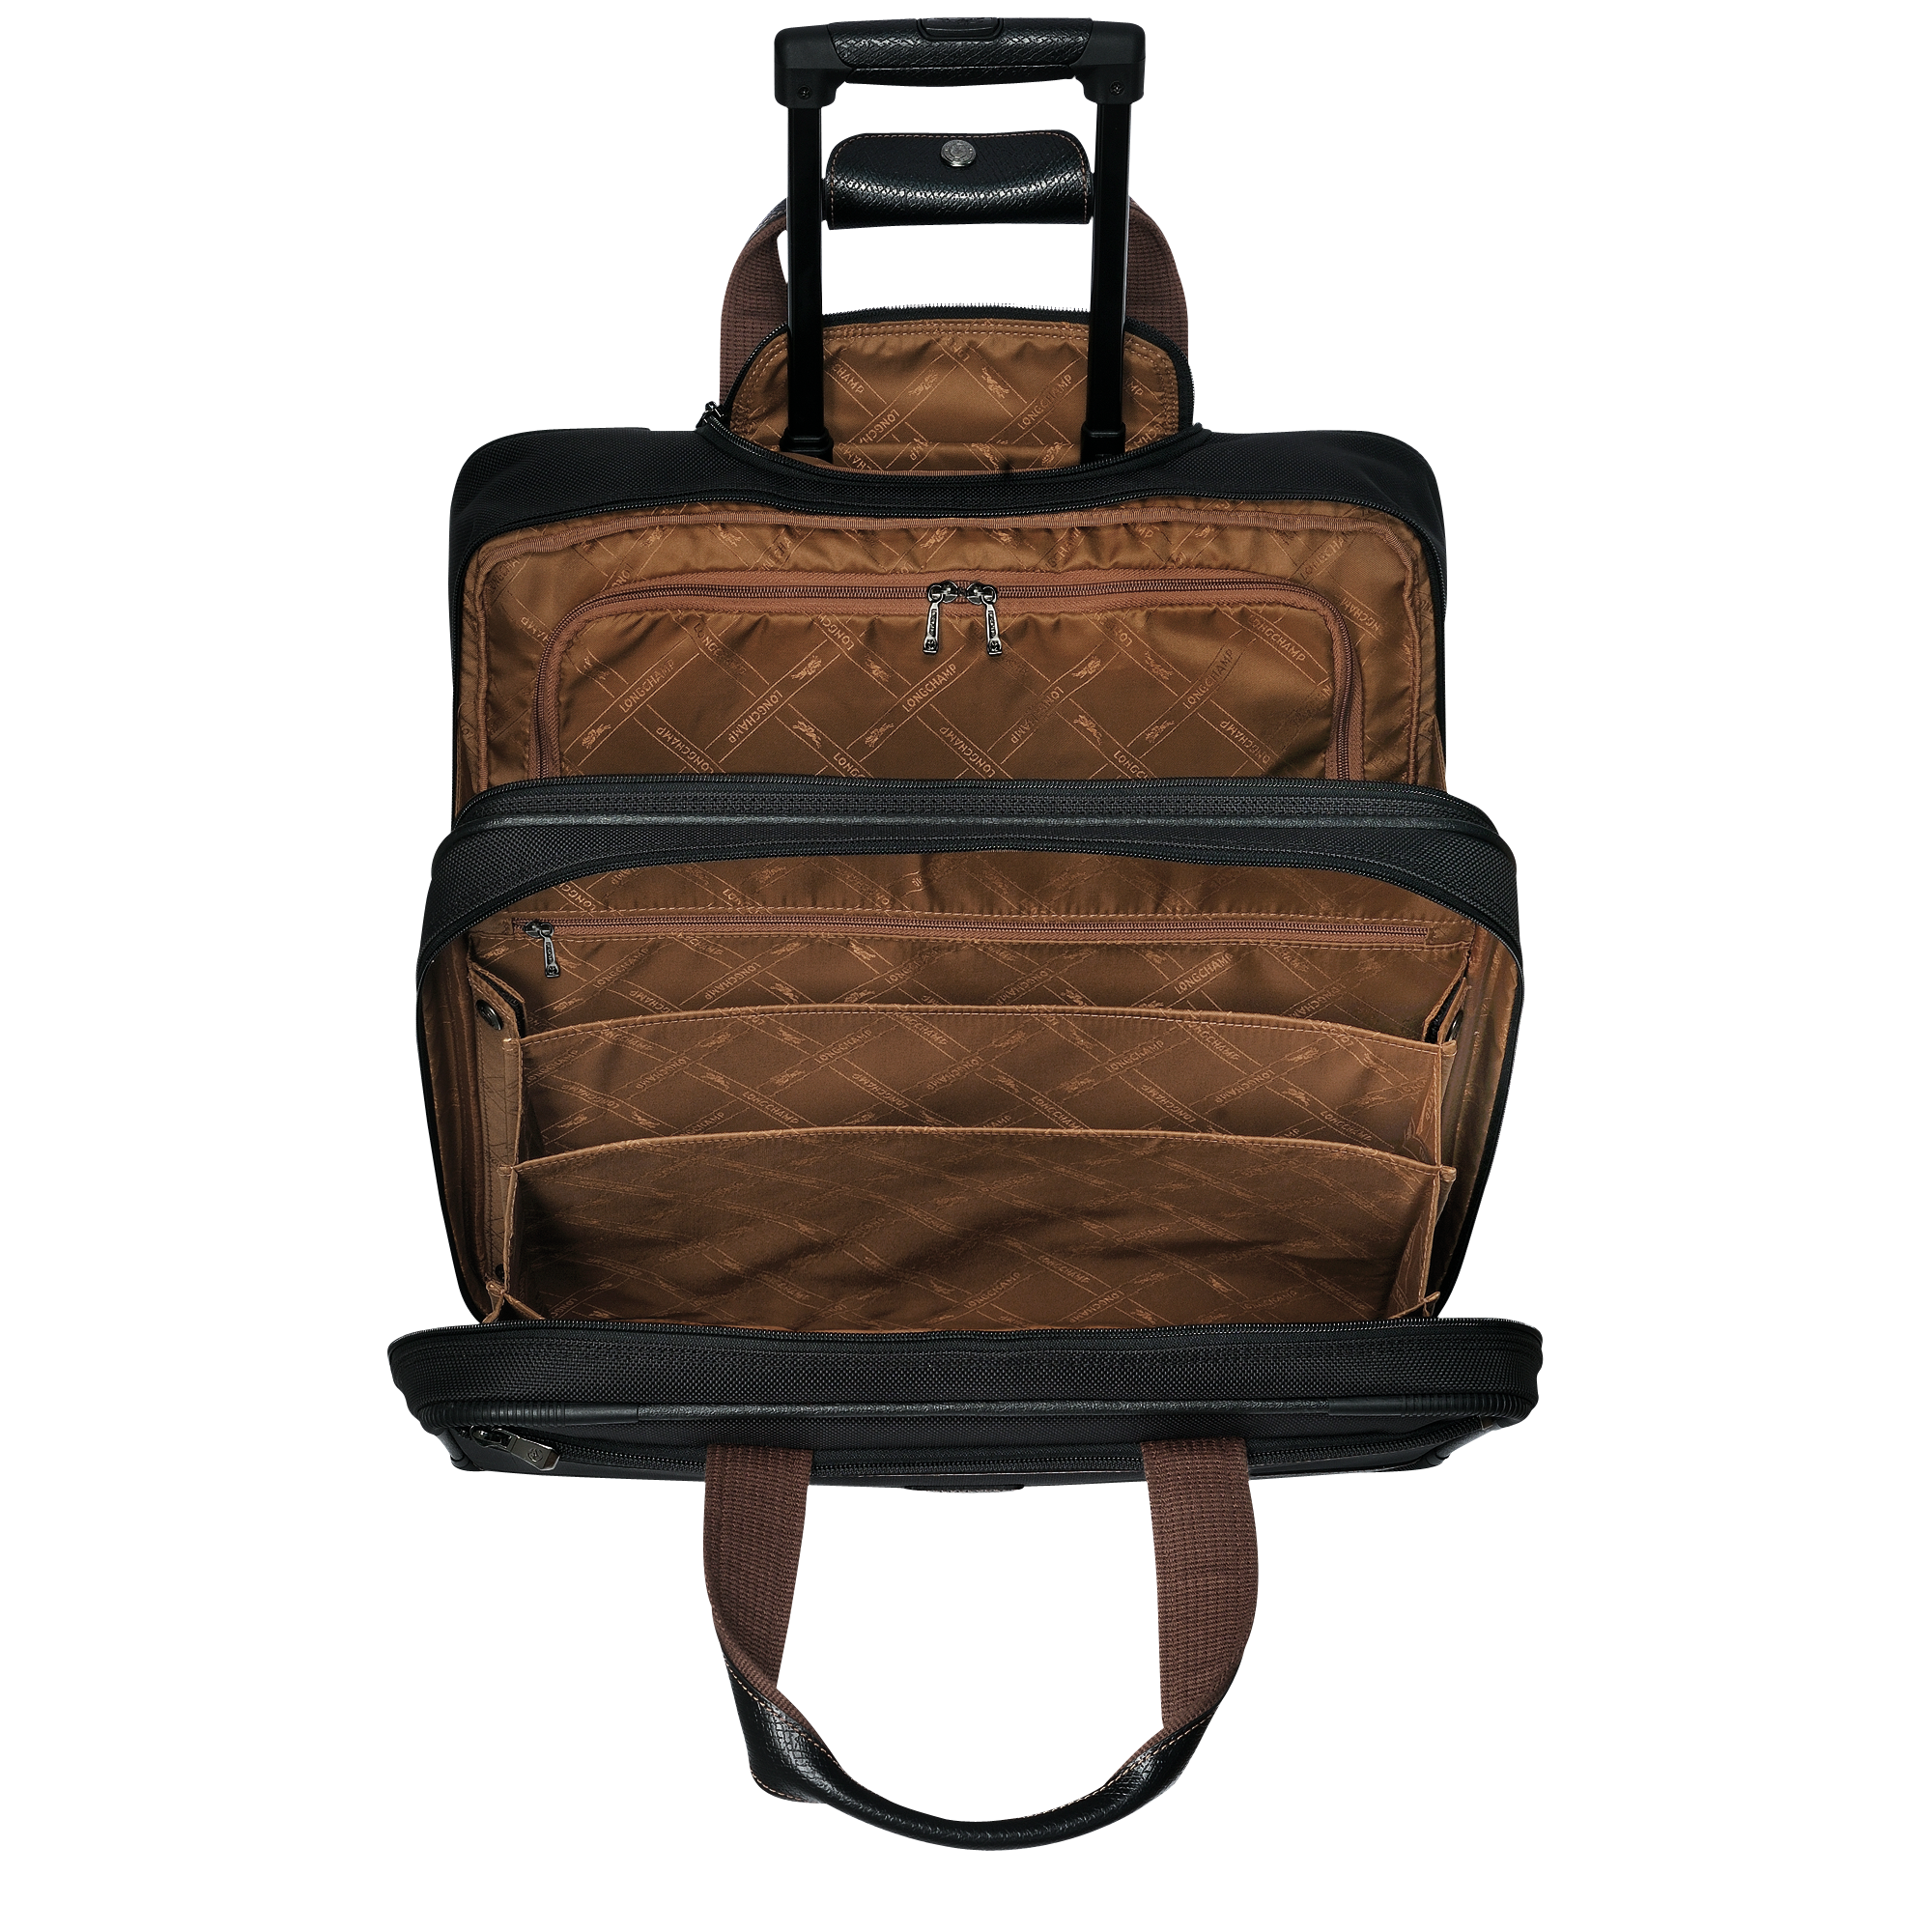 longchamps boxford small wheeled suitcase